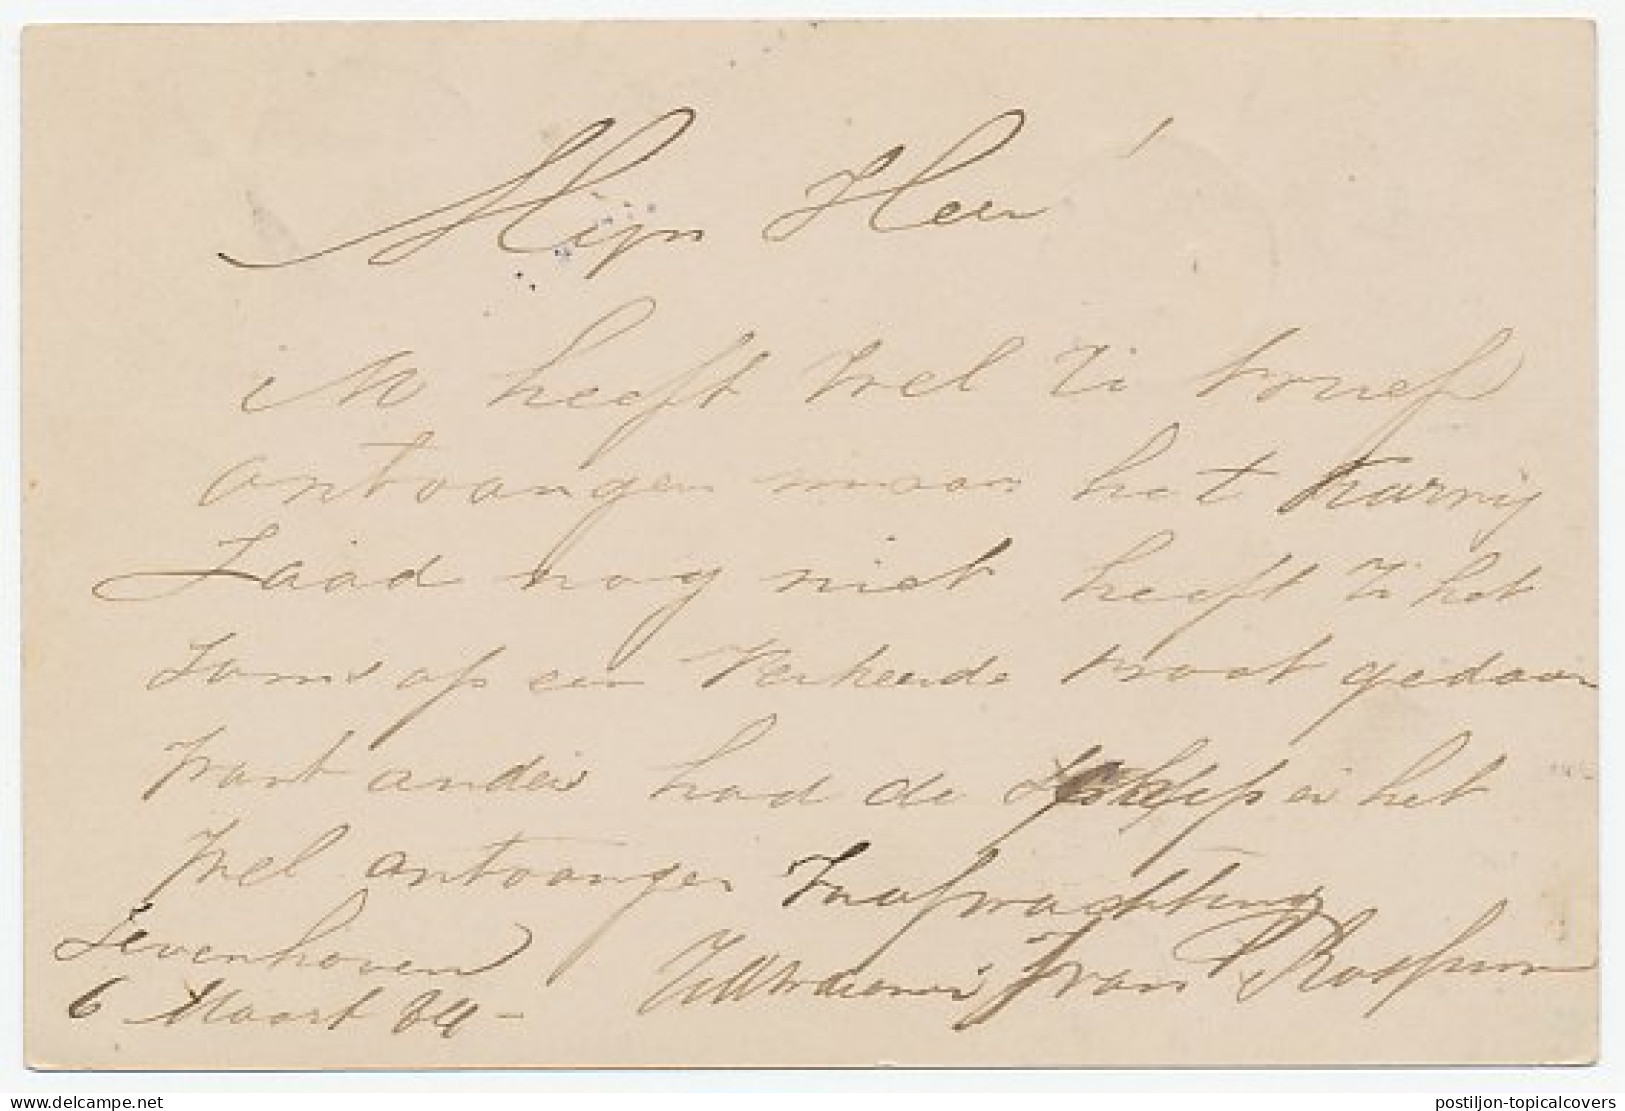 Naamstempel Nieuwveen 1884 - Lettres & Documents